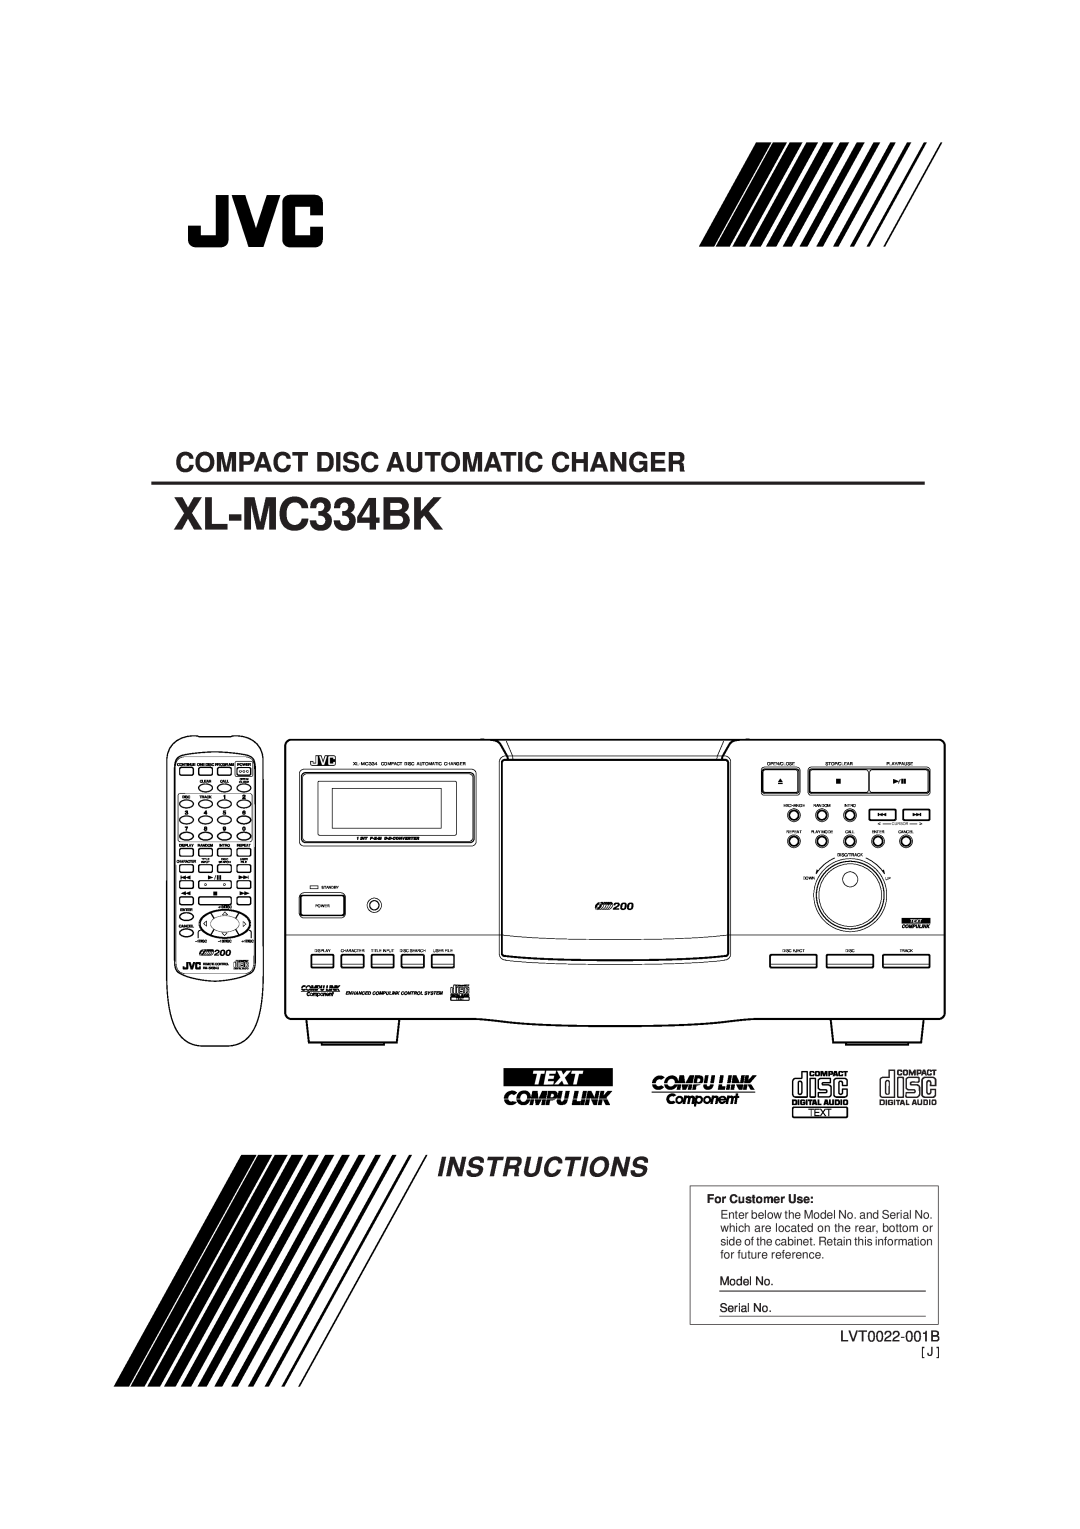 JVC XL-MC334BK manual LVT0022-001B, Compact Disc Automatic Changer, Instructions, For Customer Use 